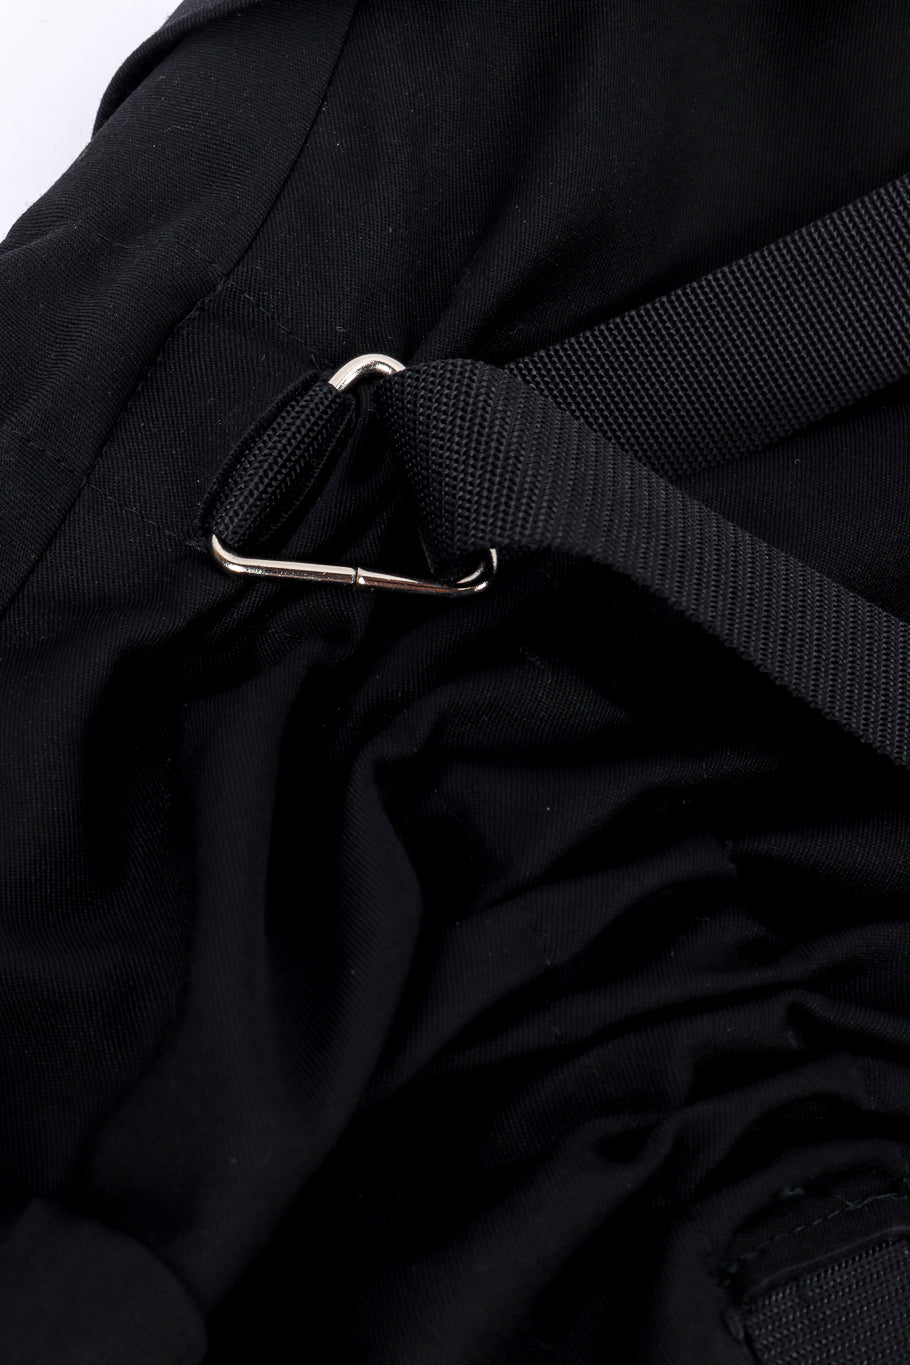 Junya Watanabe 2003 S/S Parachute Harness Jacket hardware closeup @recessla